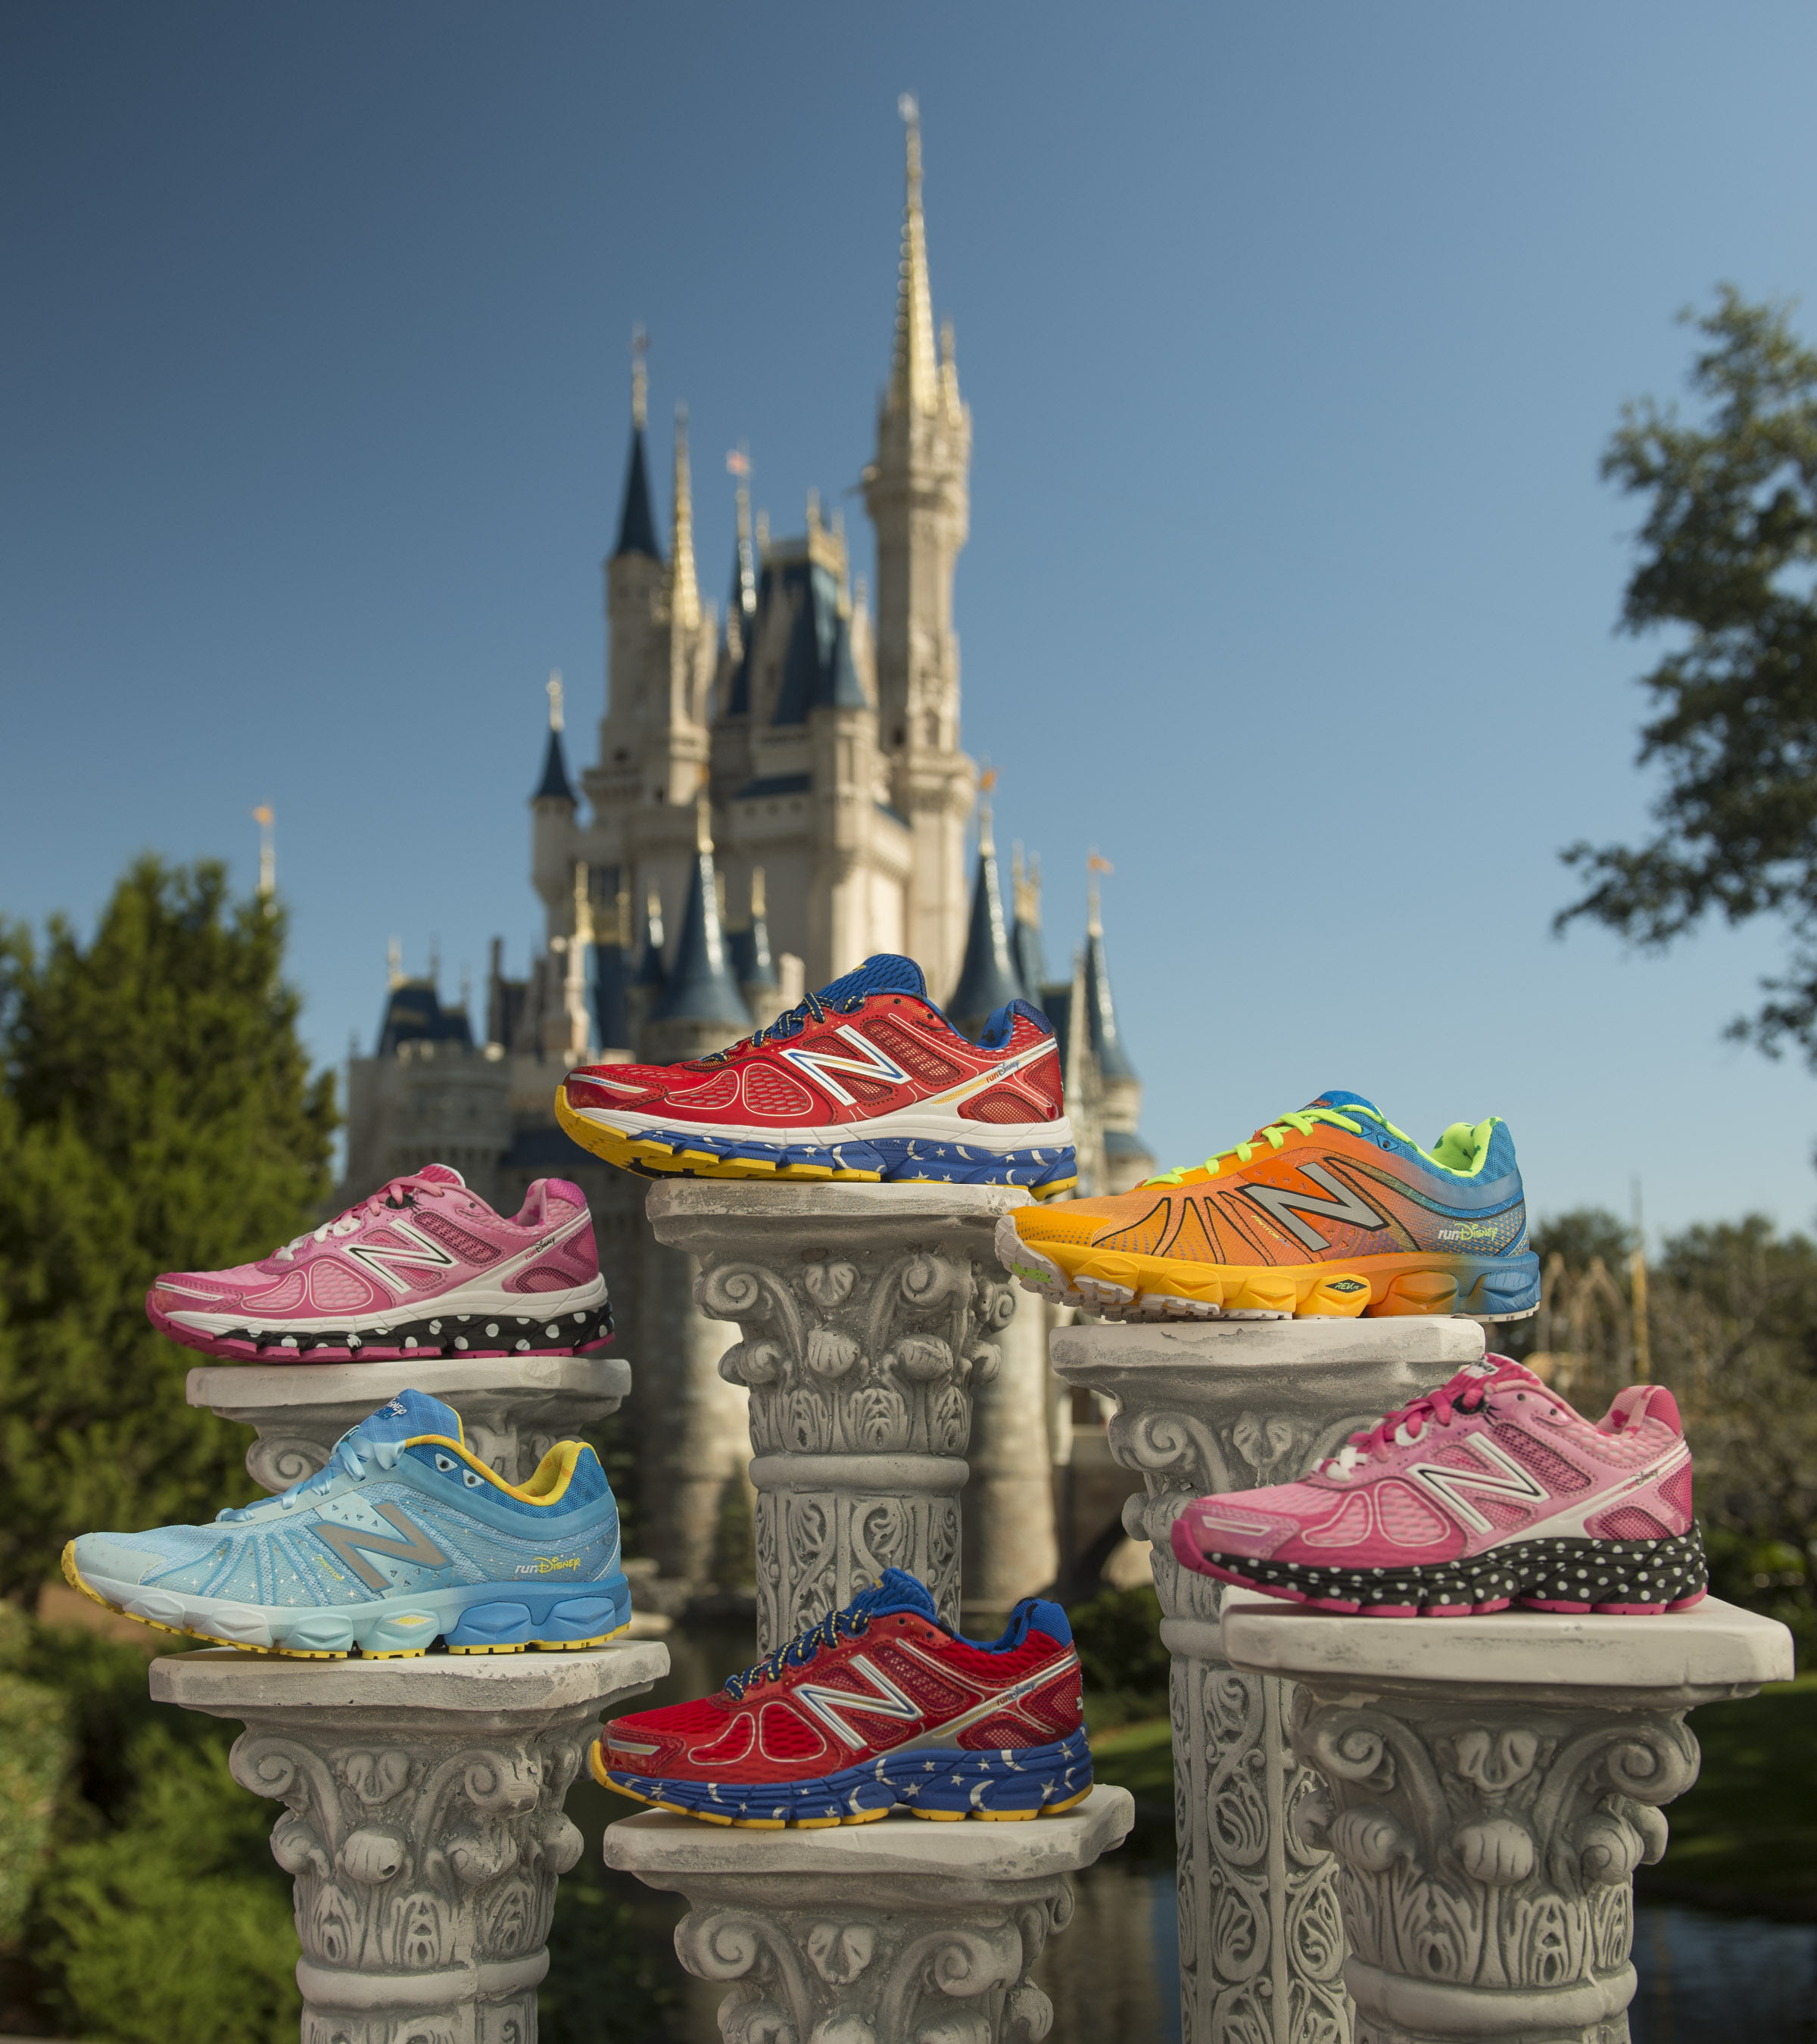 How To Buy New Balance Disney Shoes At Disney Princess